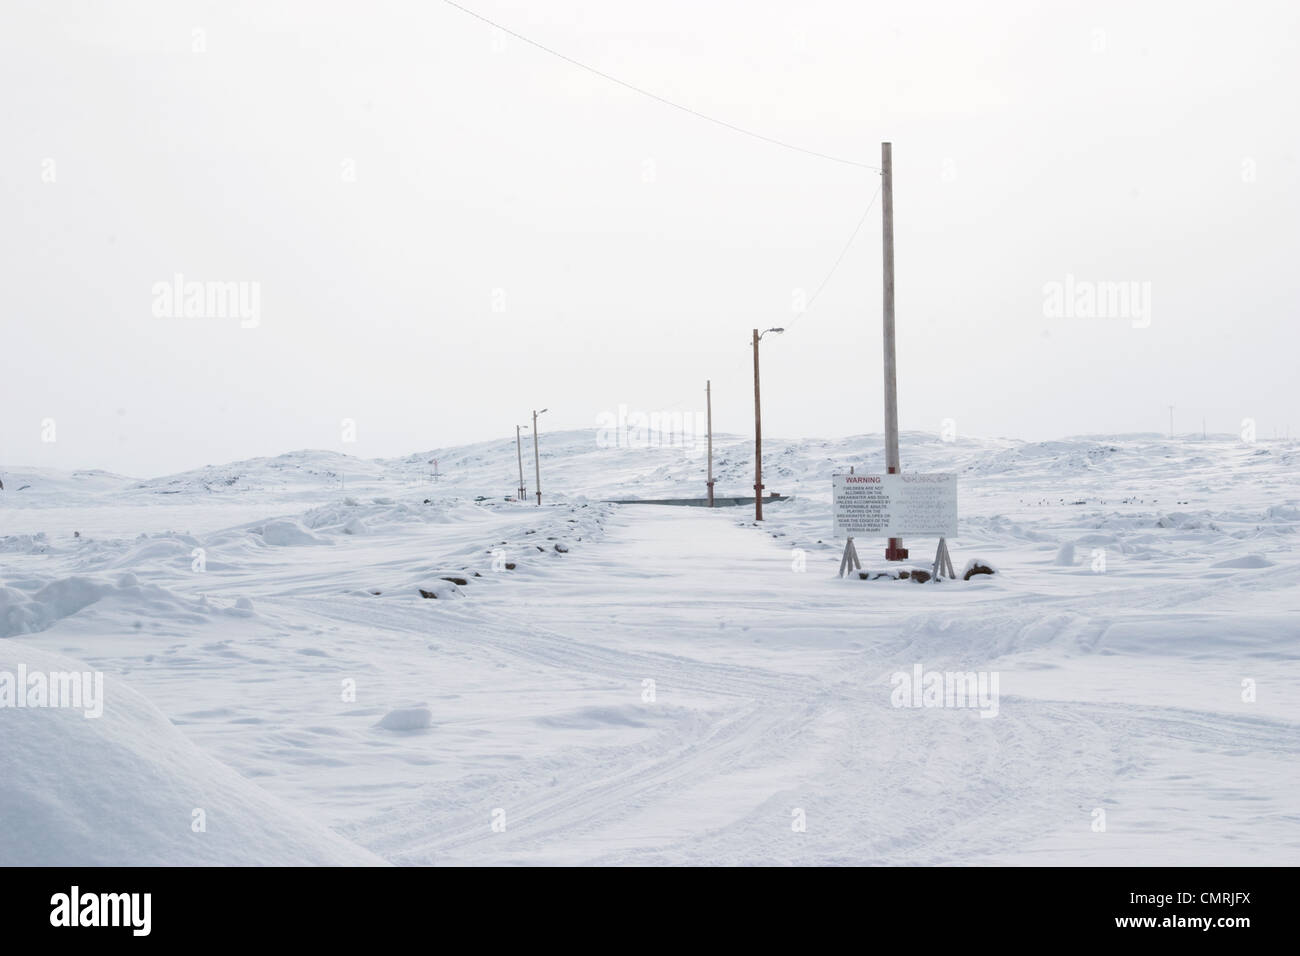 Segnale di avviso in lingua inglese e Inuktitut accanto a una coperta di neve dock, Iqaluit, Nunavut Foto Stock